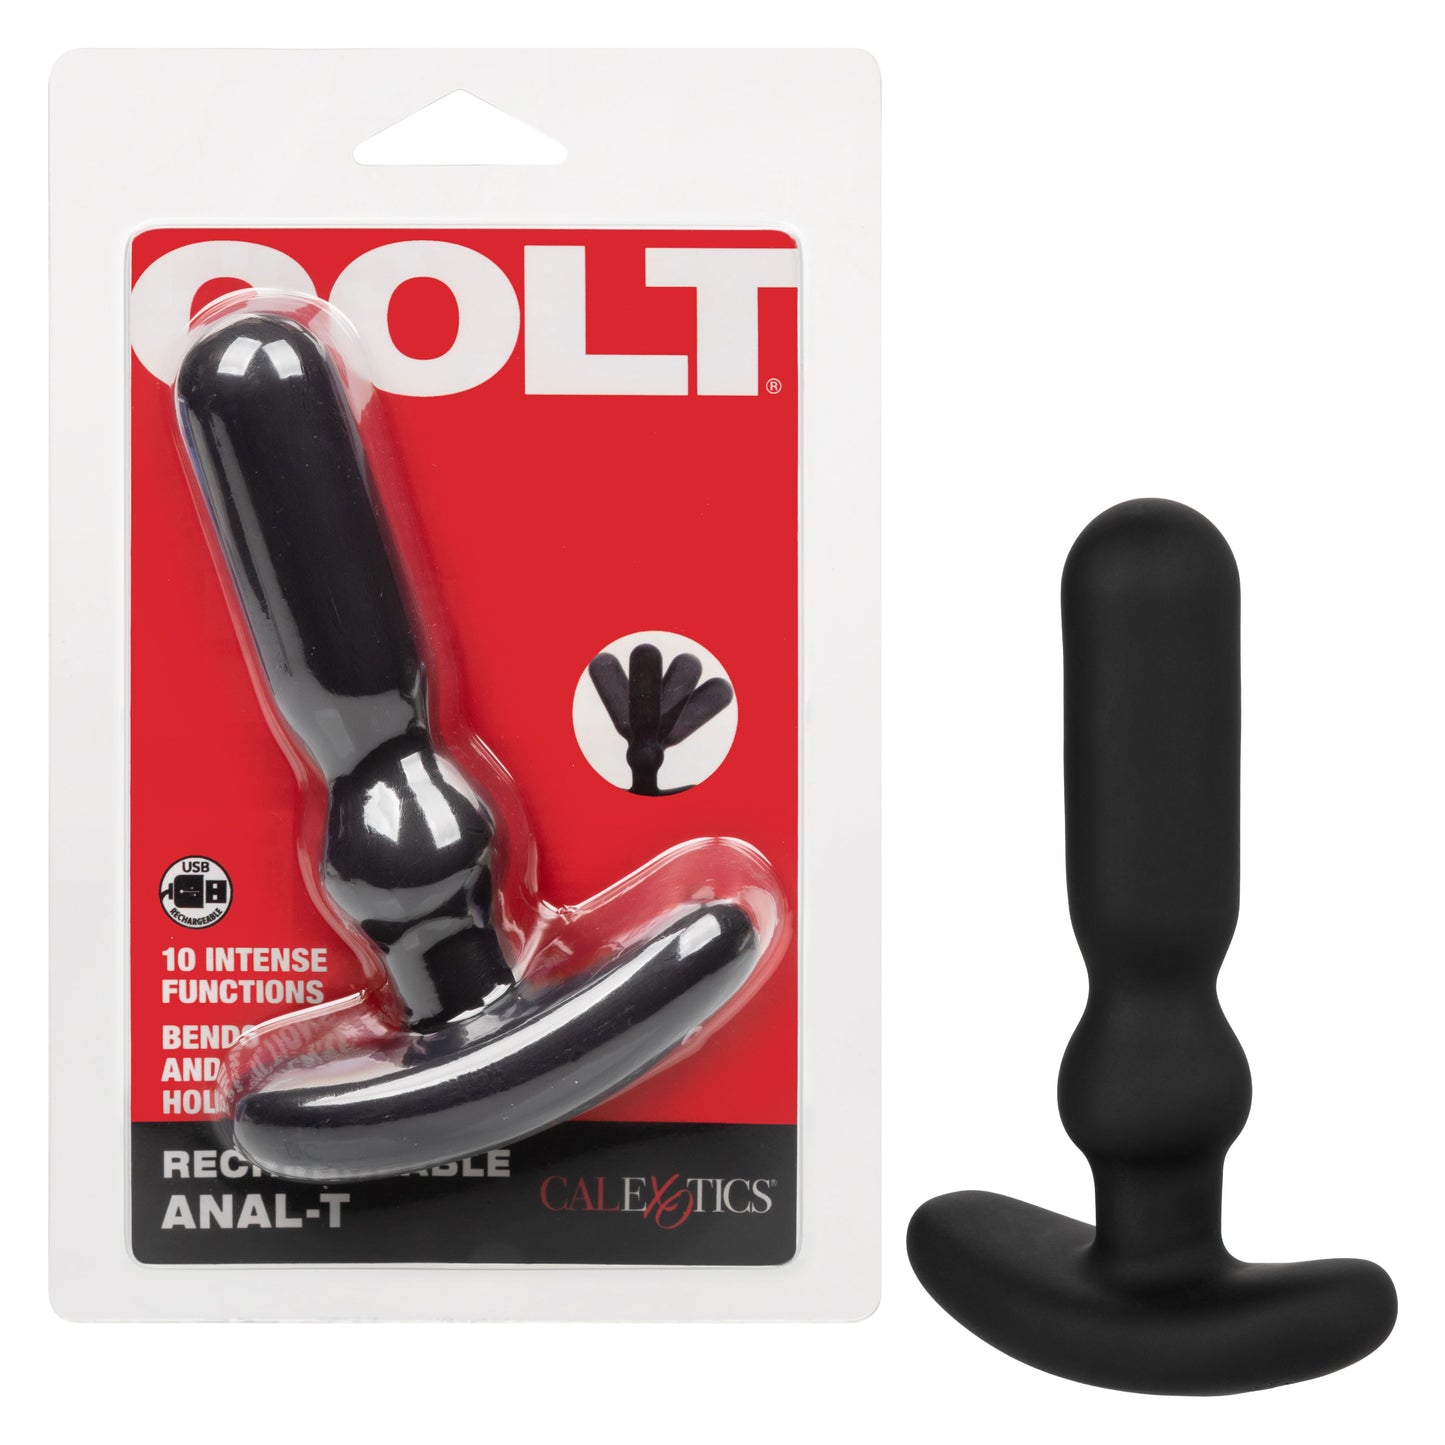 Colt Rechargeable Anal-T - Black